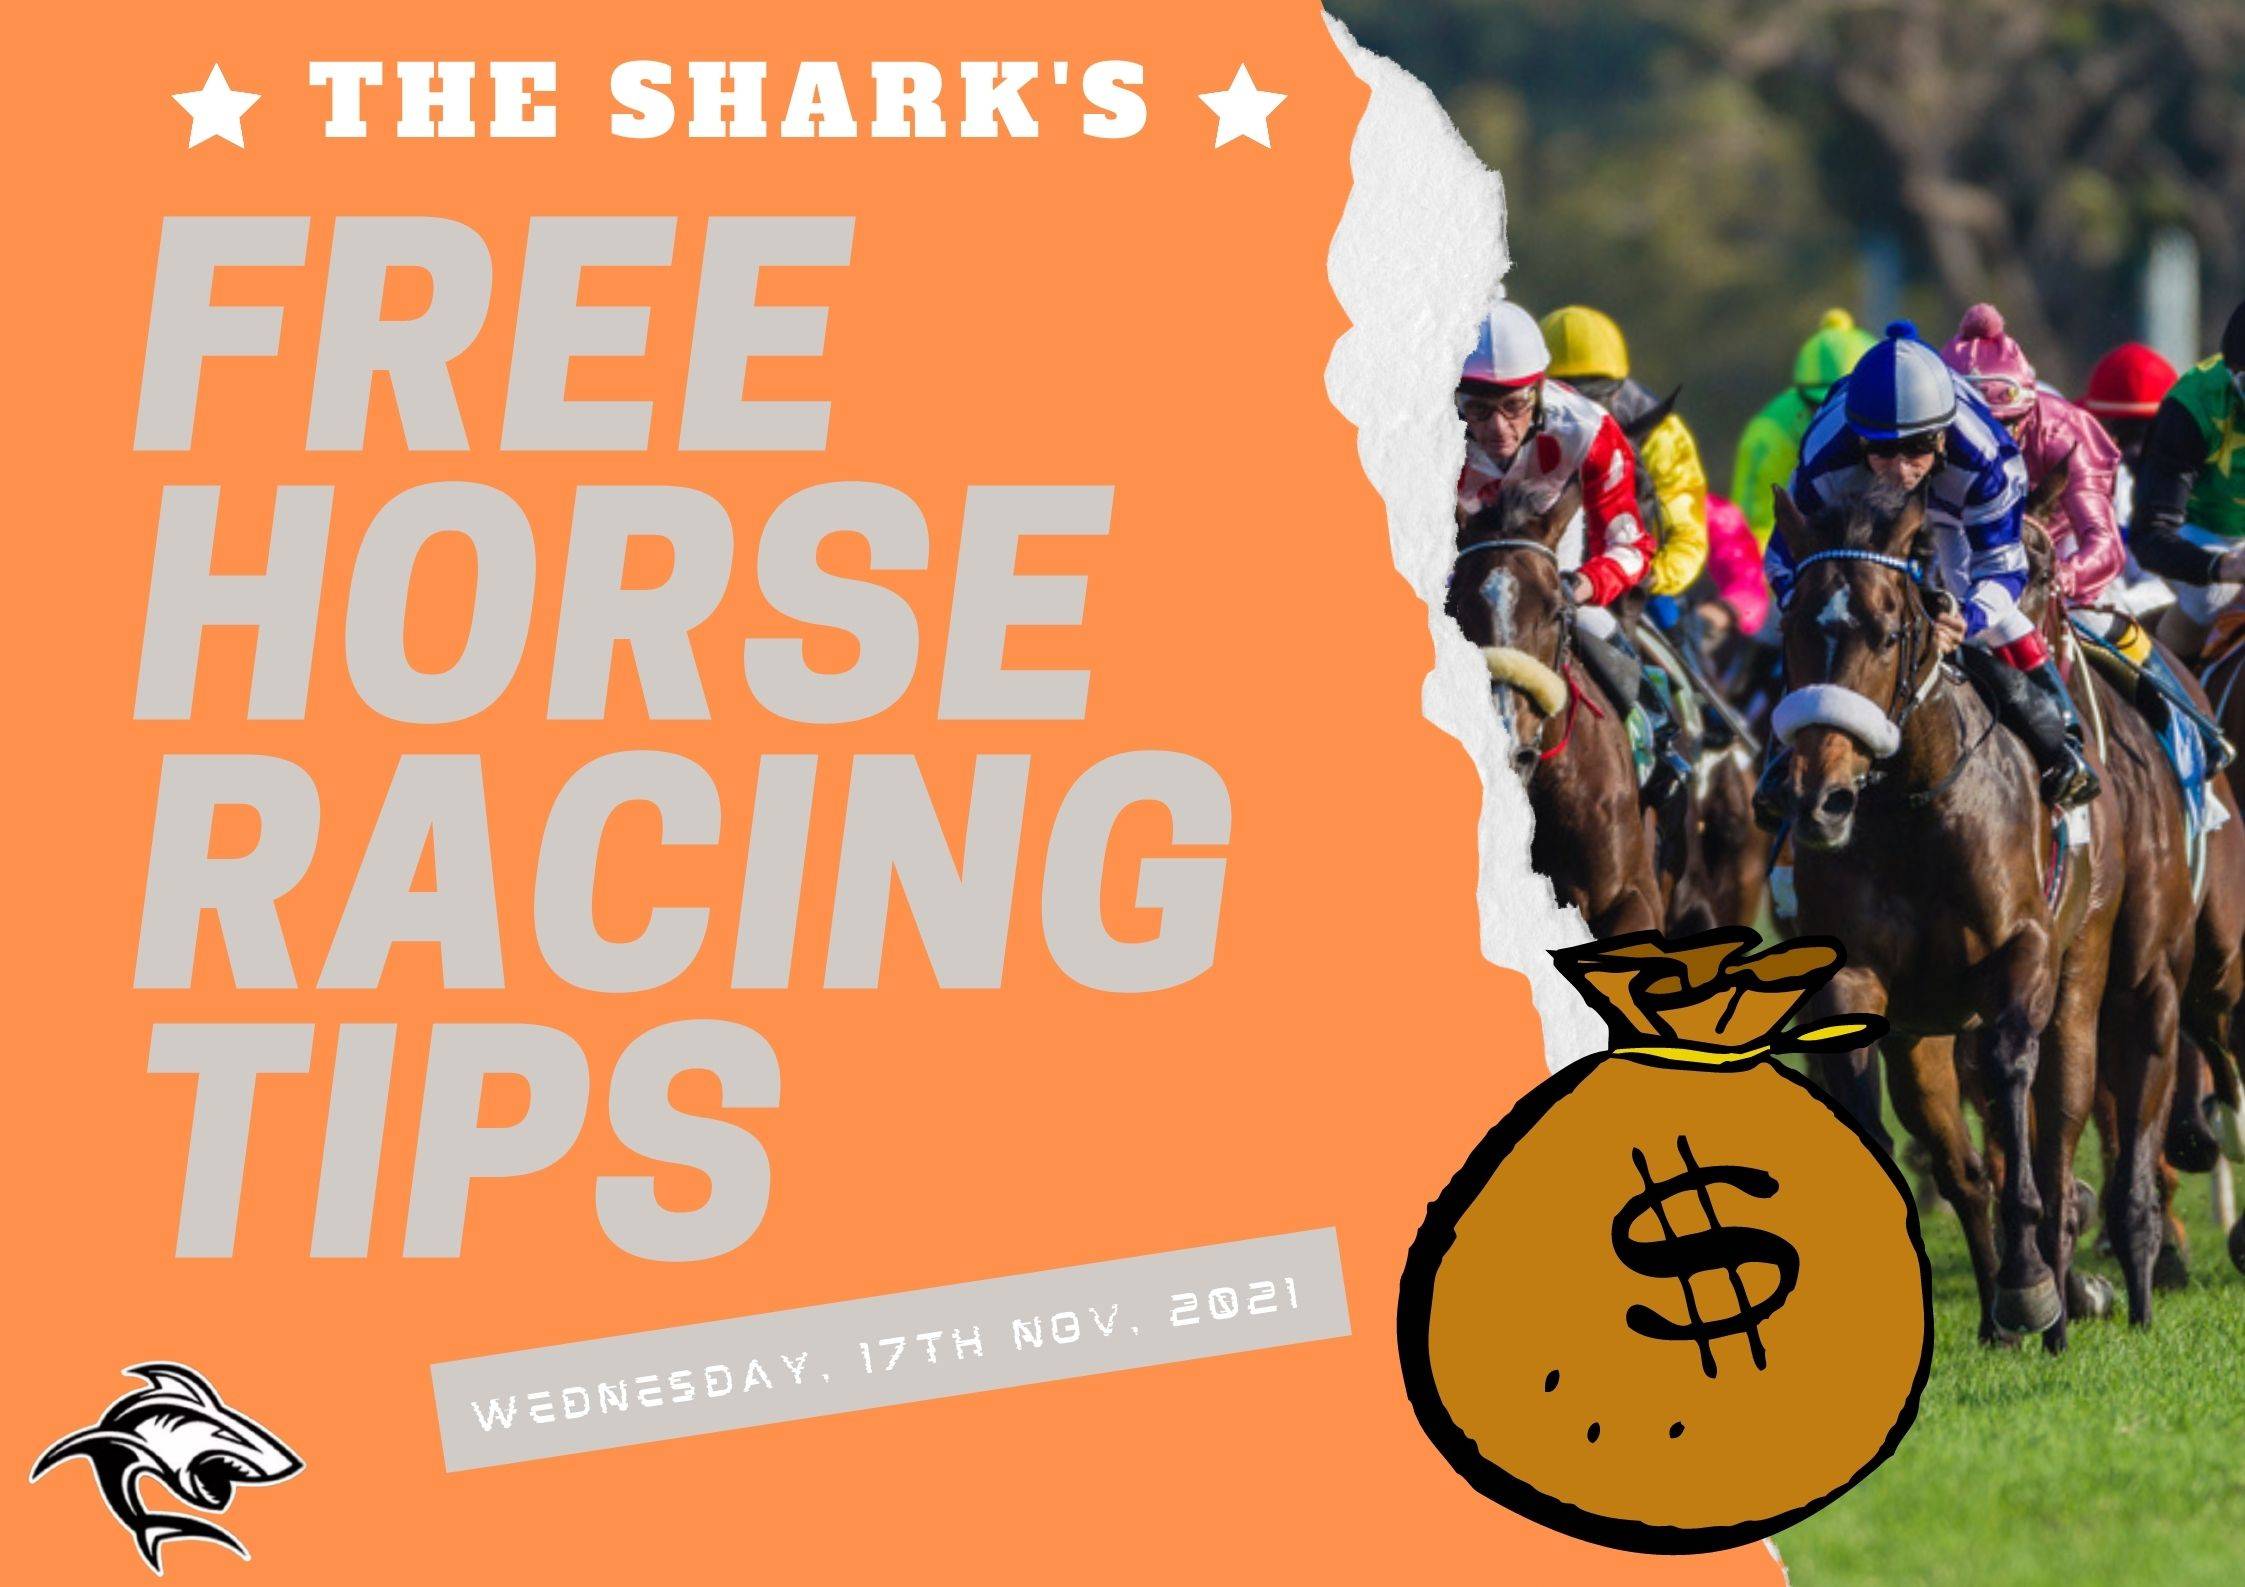 Free Horse Racing Tips - 17th Nov